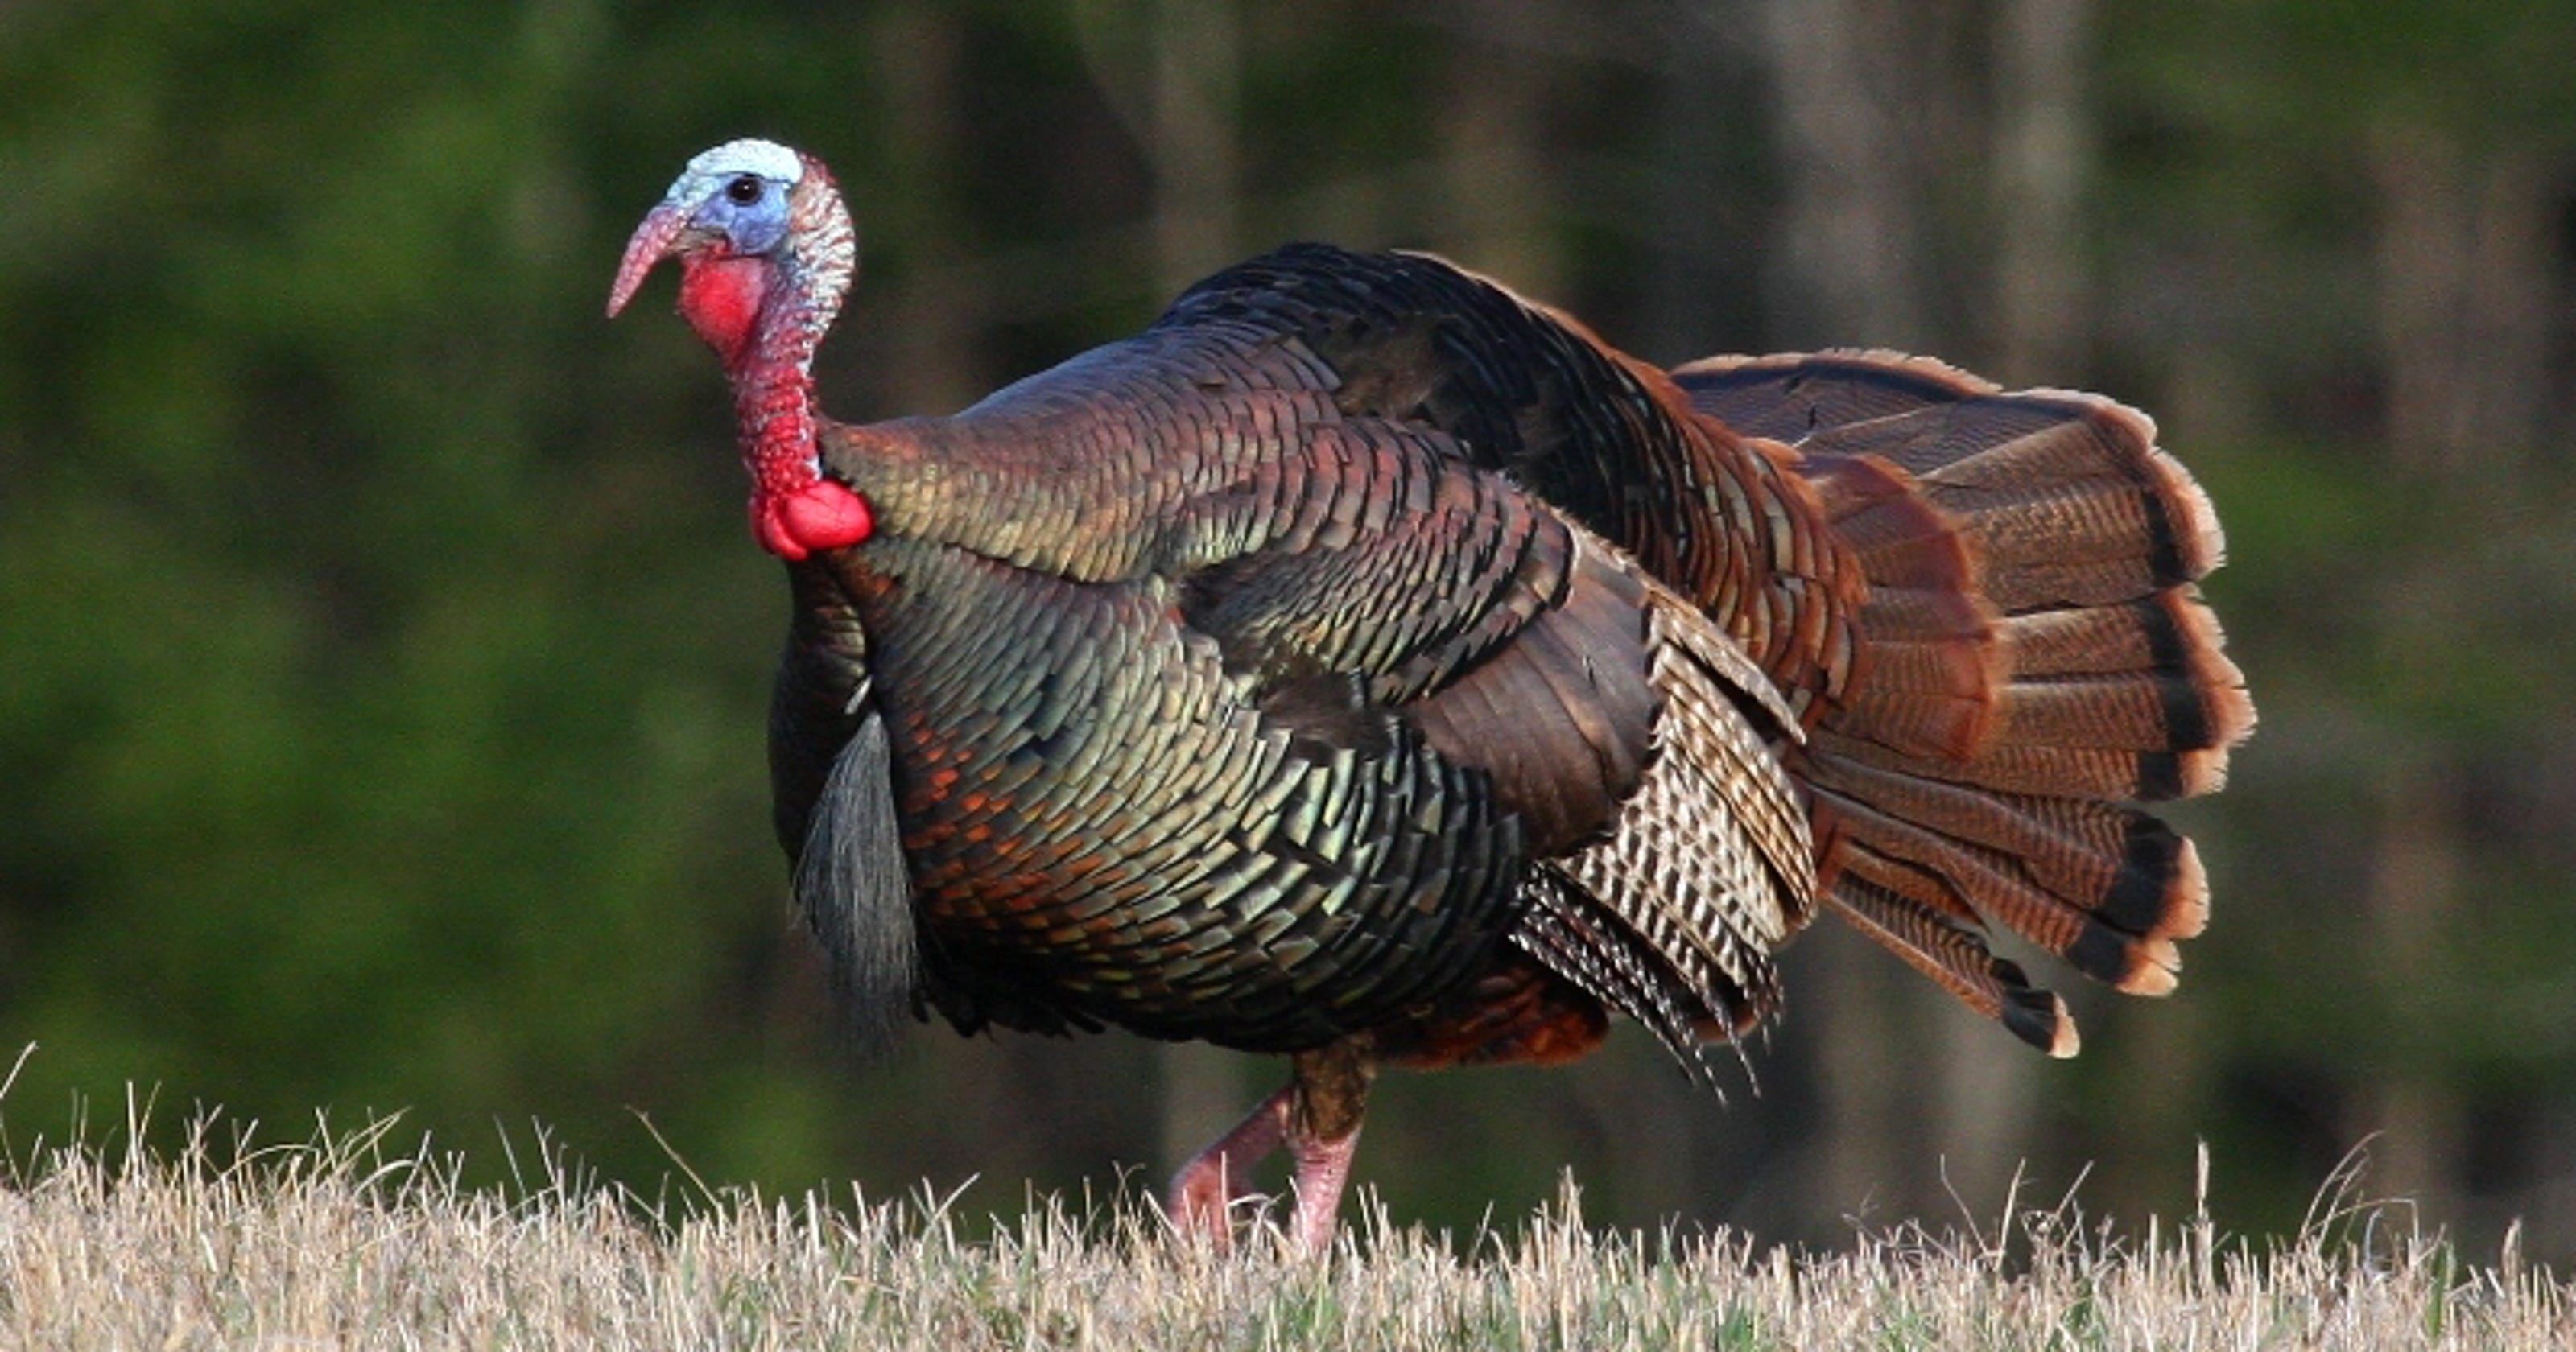 2019 Pa. spring turkey season guide dates, times, regulations & more